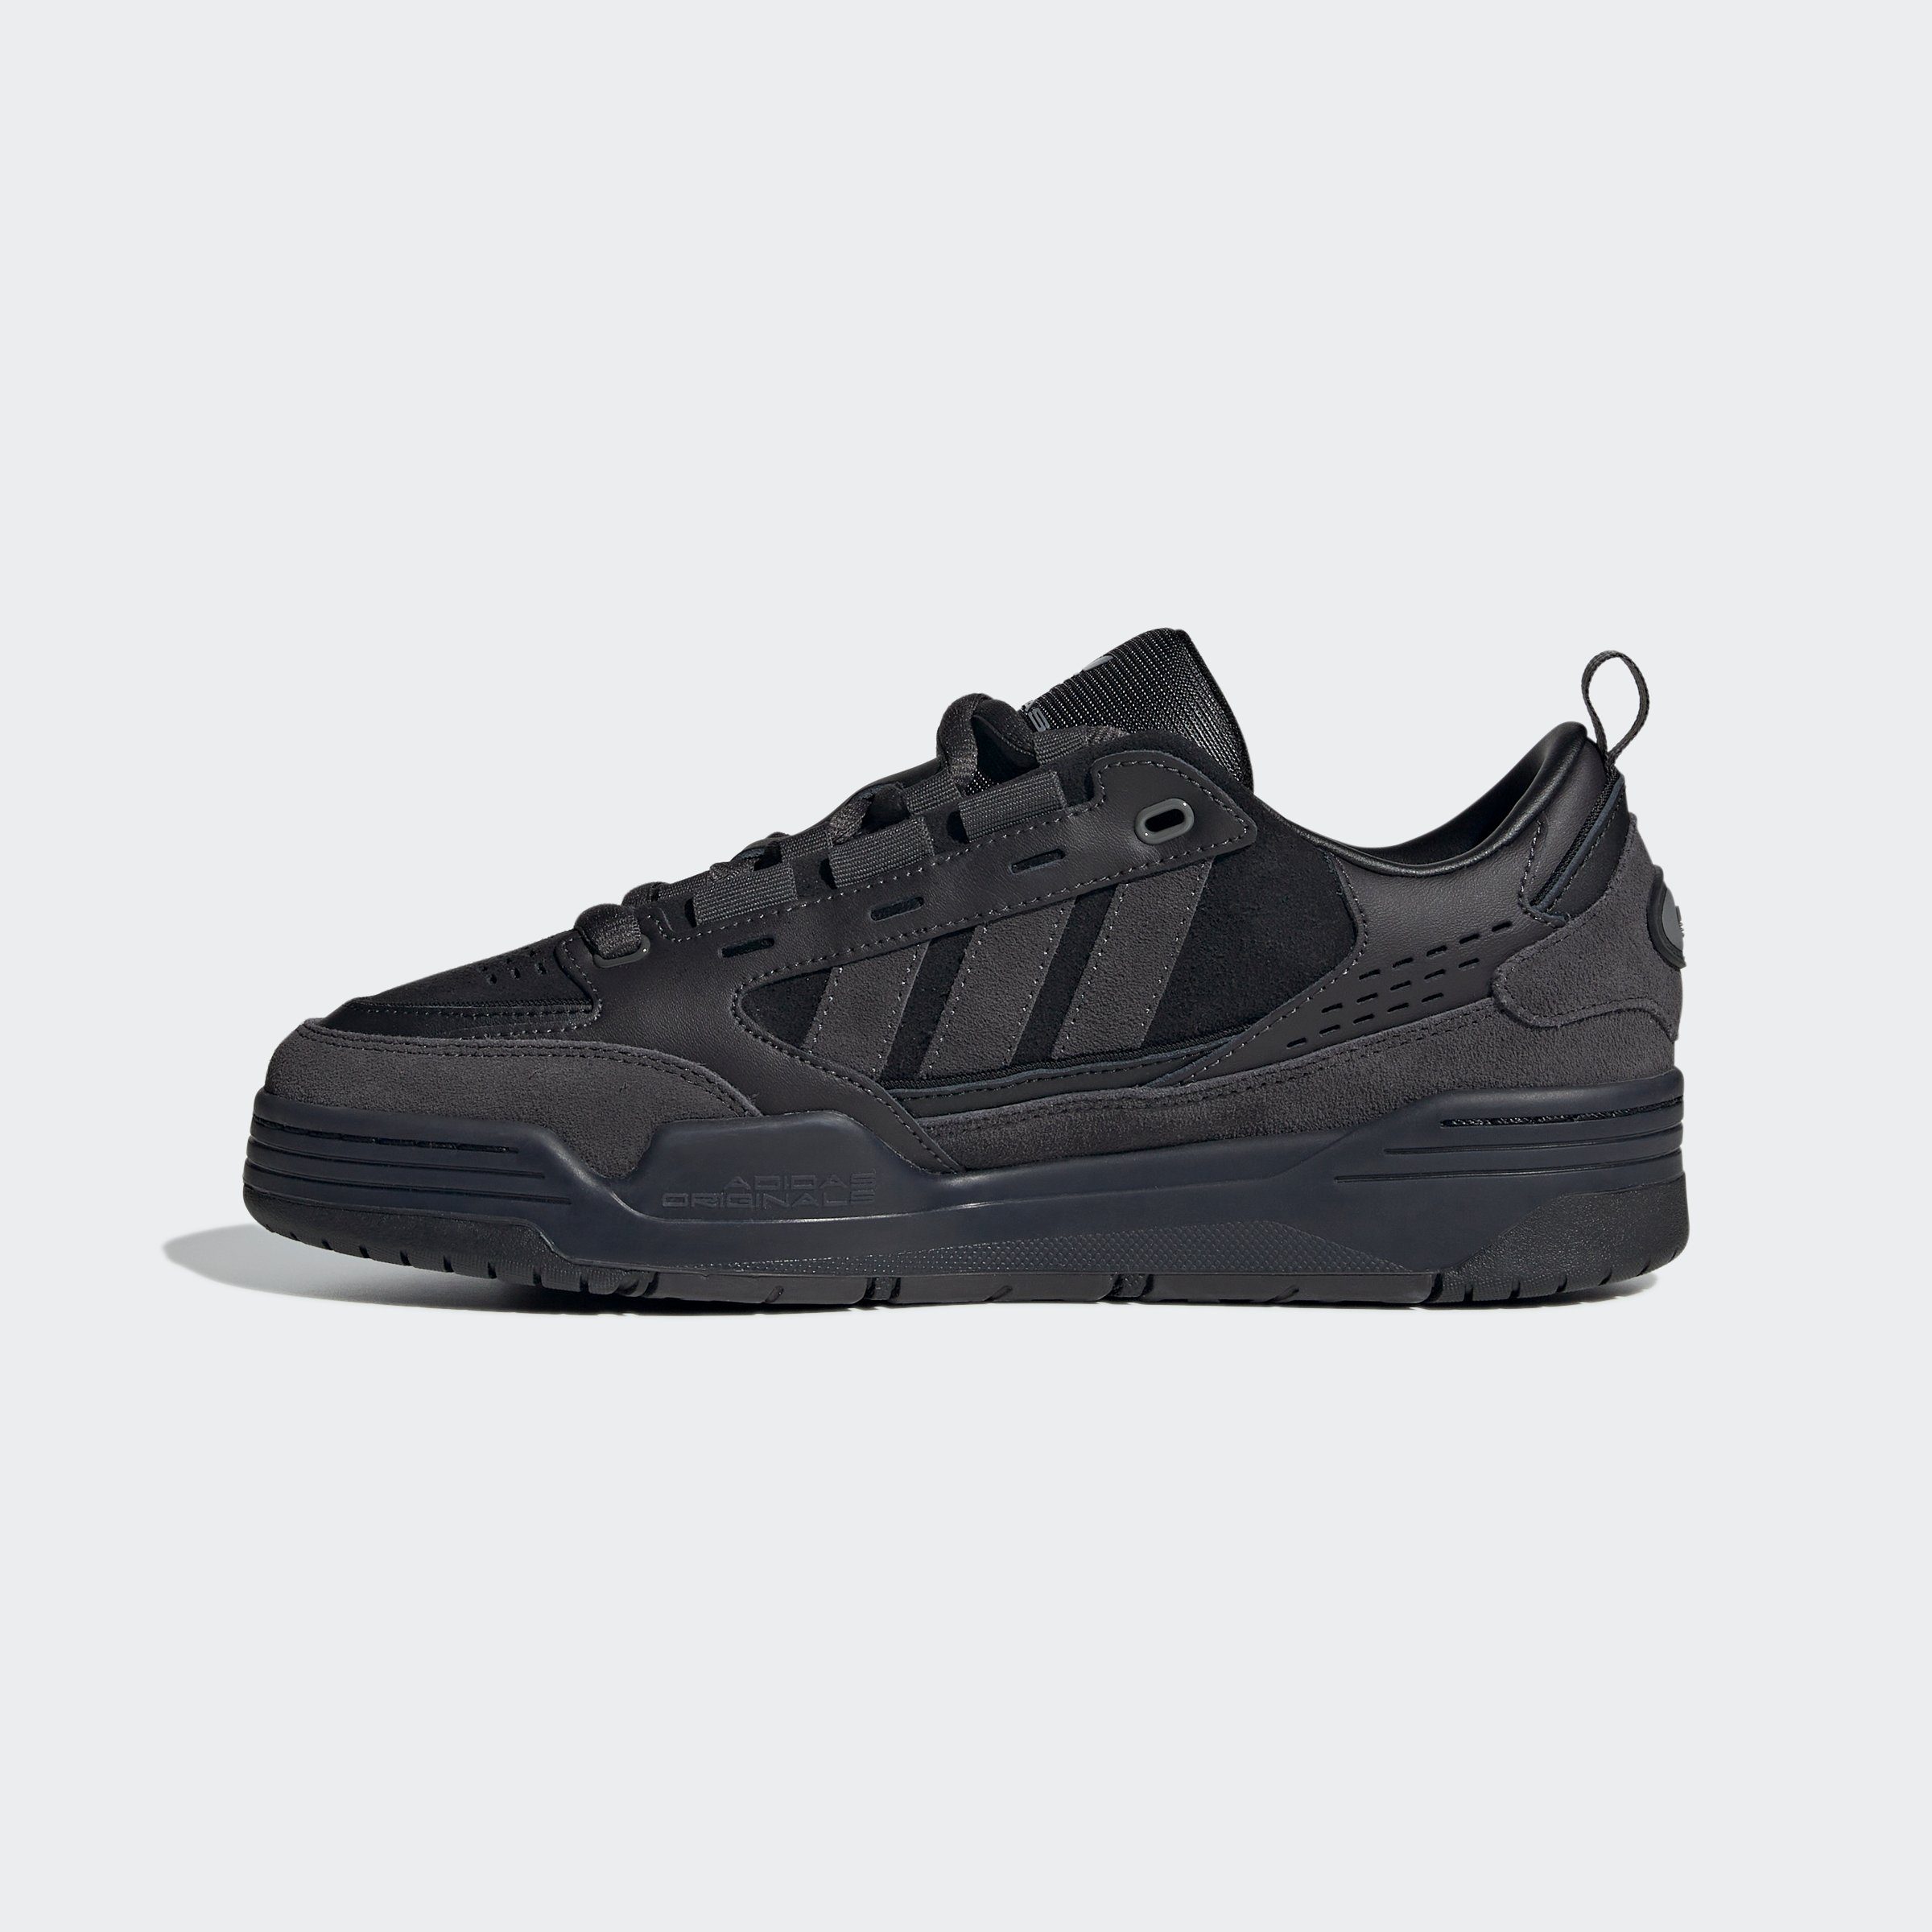 adidas Originals ADI2000 Sneaker Utility Black Black Utility / / Core Black